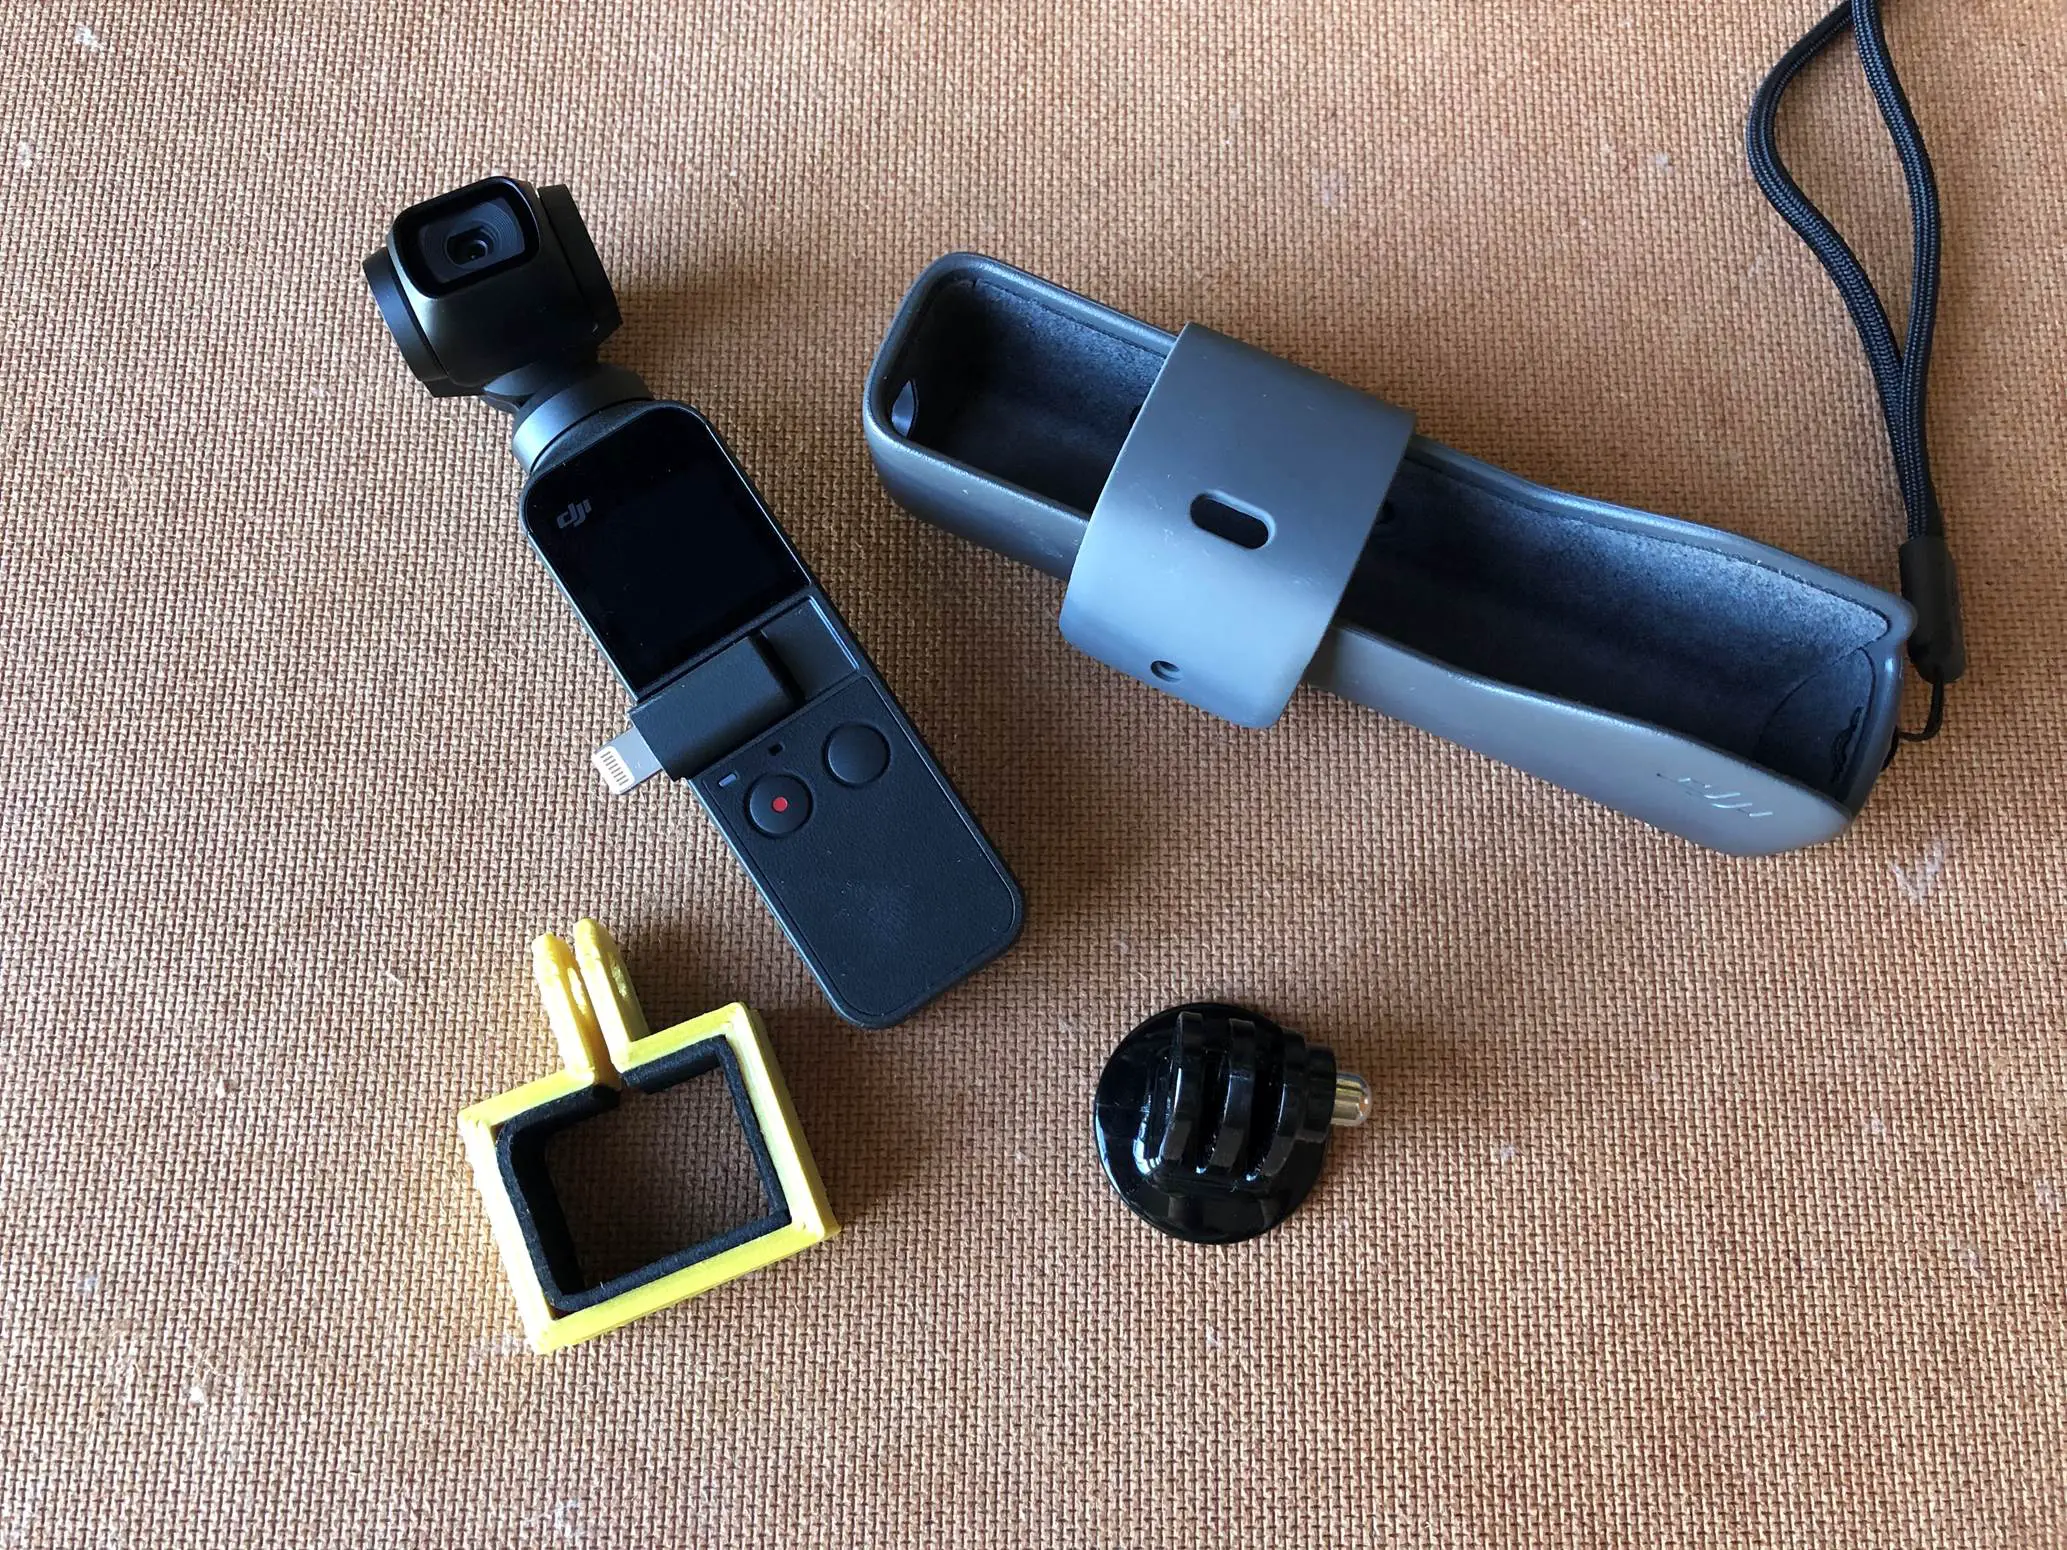 3D Printed GoPro Mount For DJI Osmo Pocket